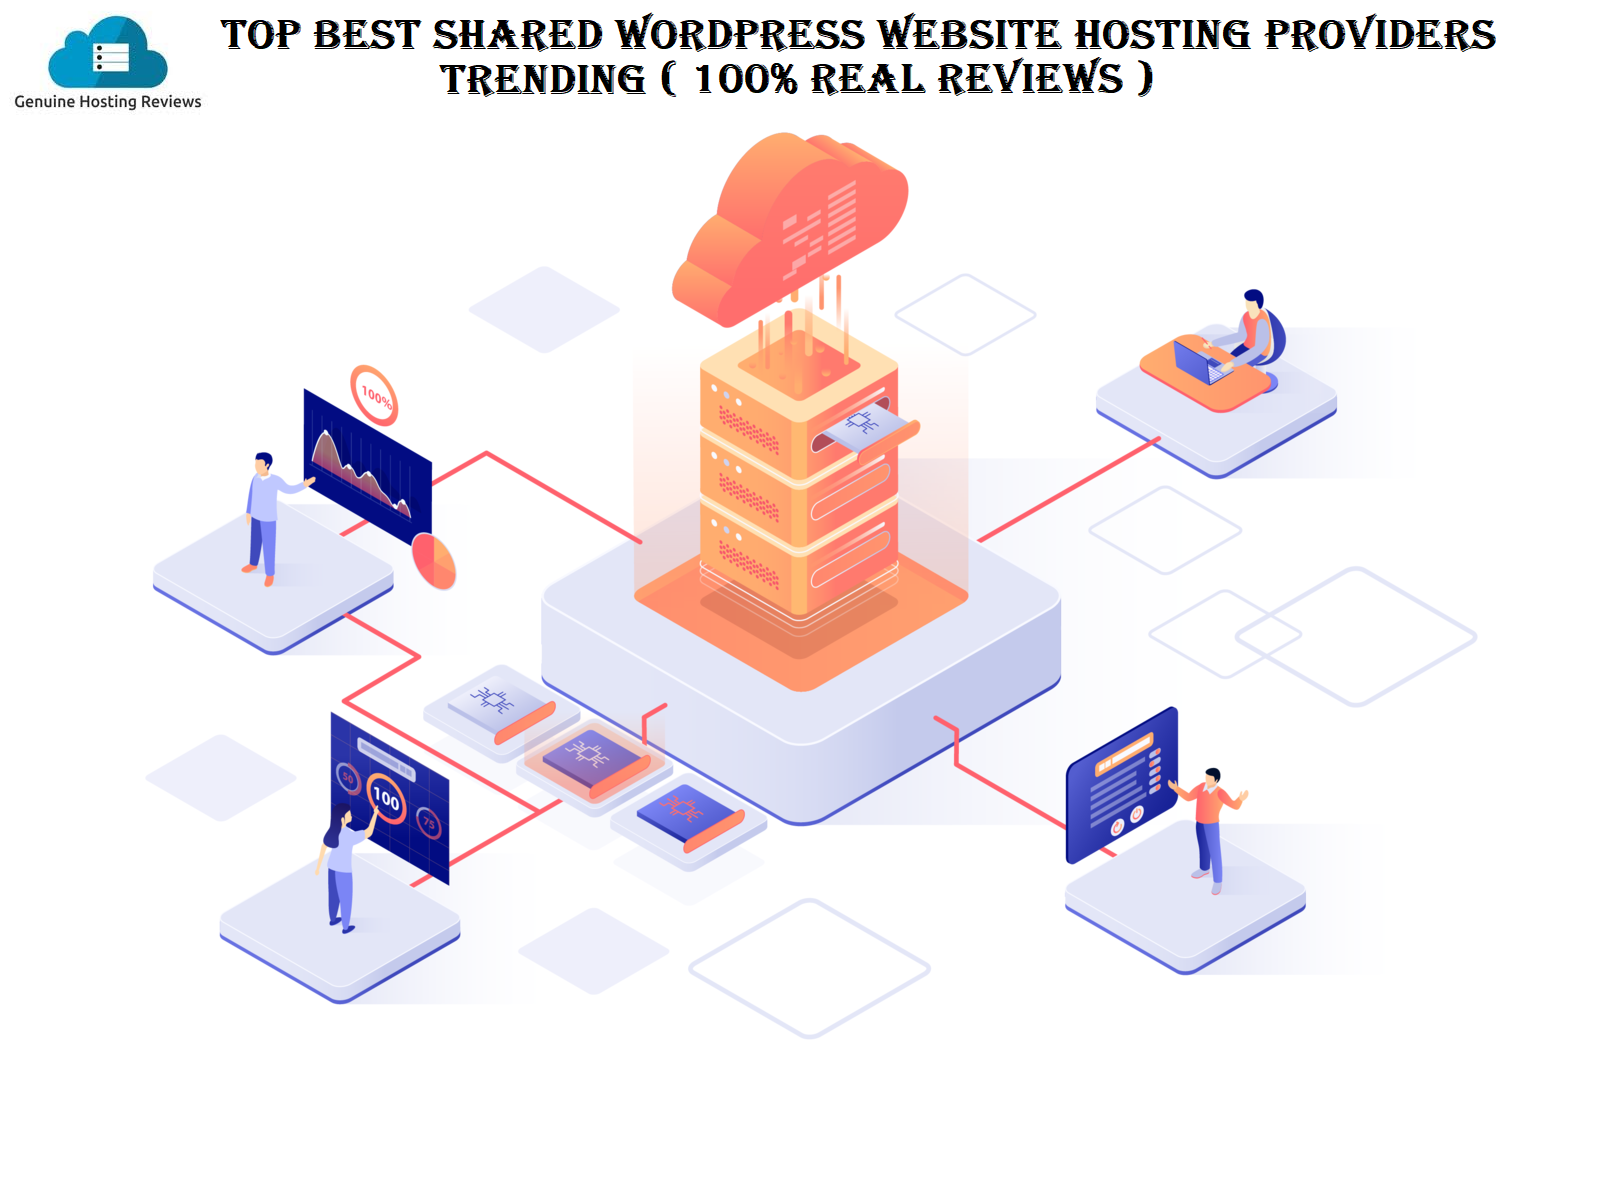 Top best Shared WordPress Website Hosting Providers trending